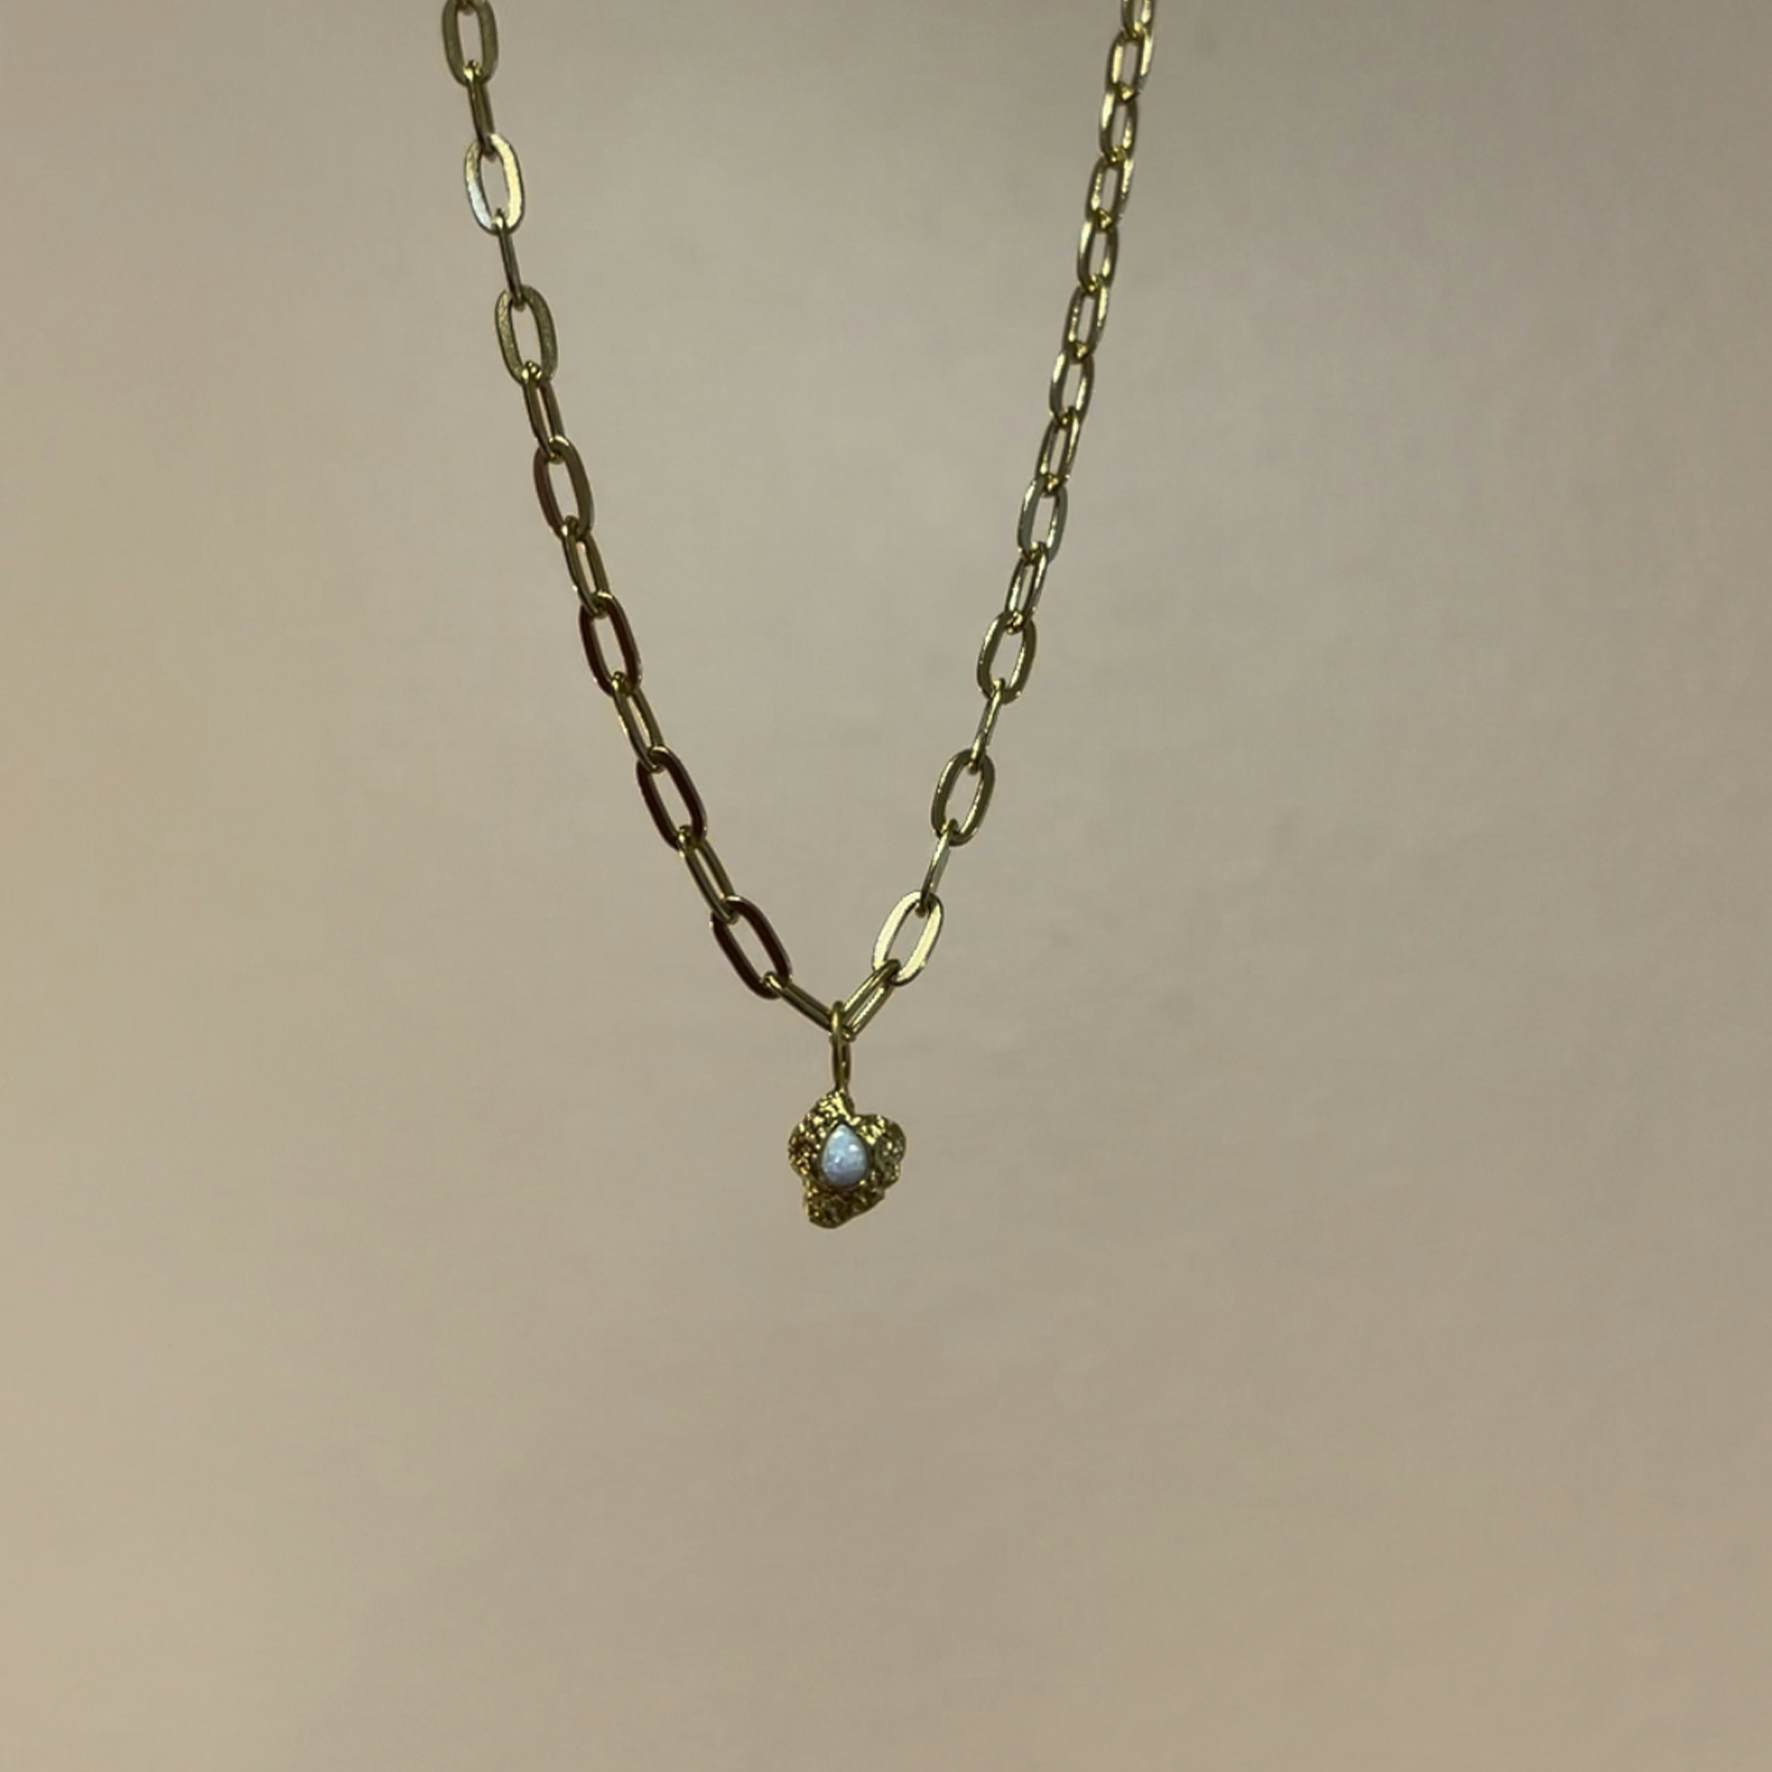 Chunky Pendant Chain från STINE A Jewelry i Förgyllt-Silver Sterling 925